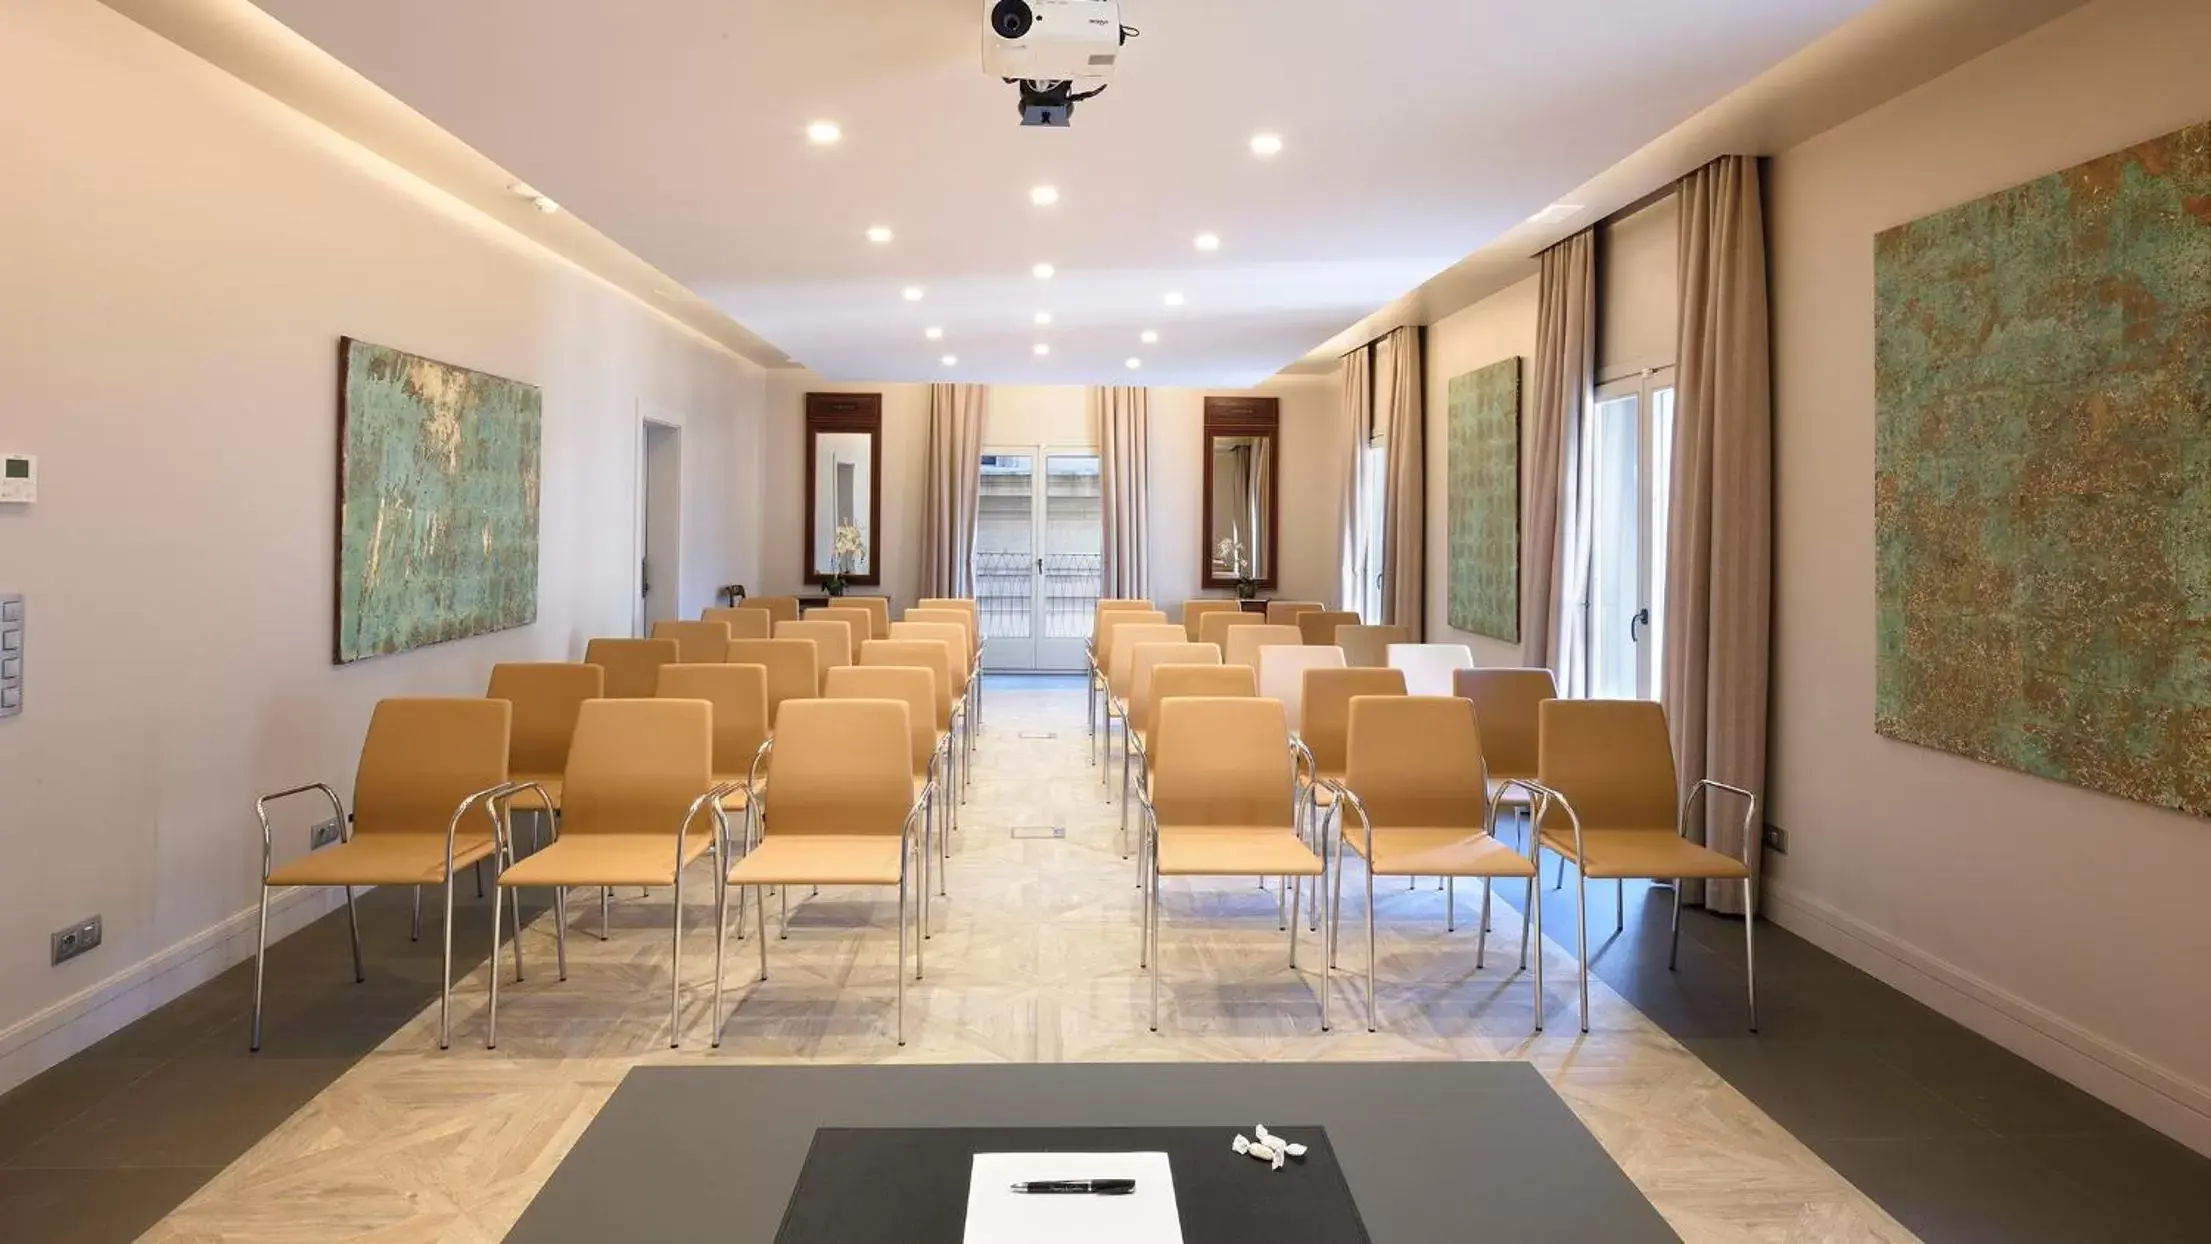 Meeting/conference room in Duquesa de Cardona 4* Sup